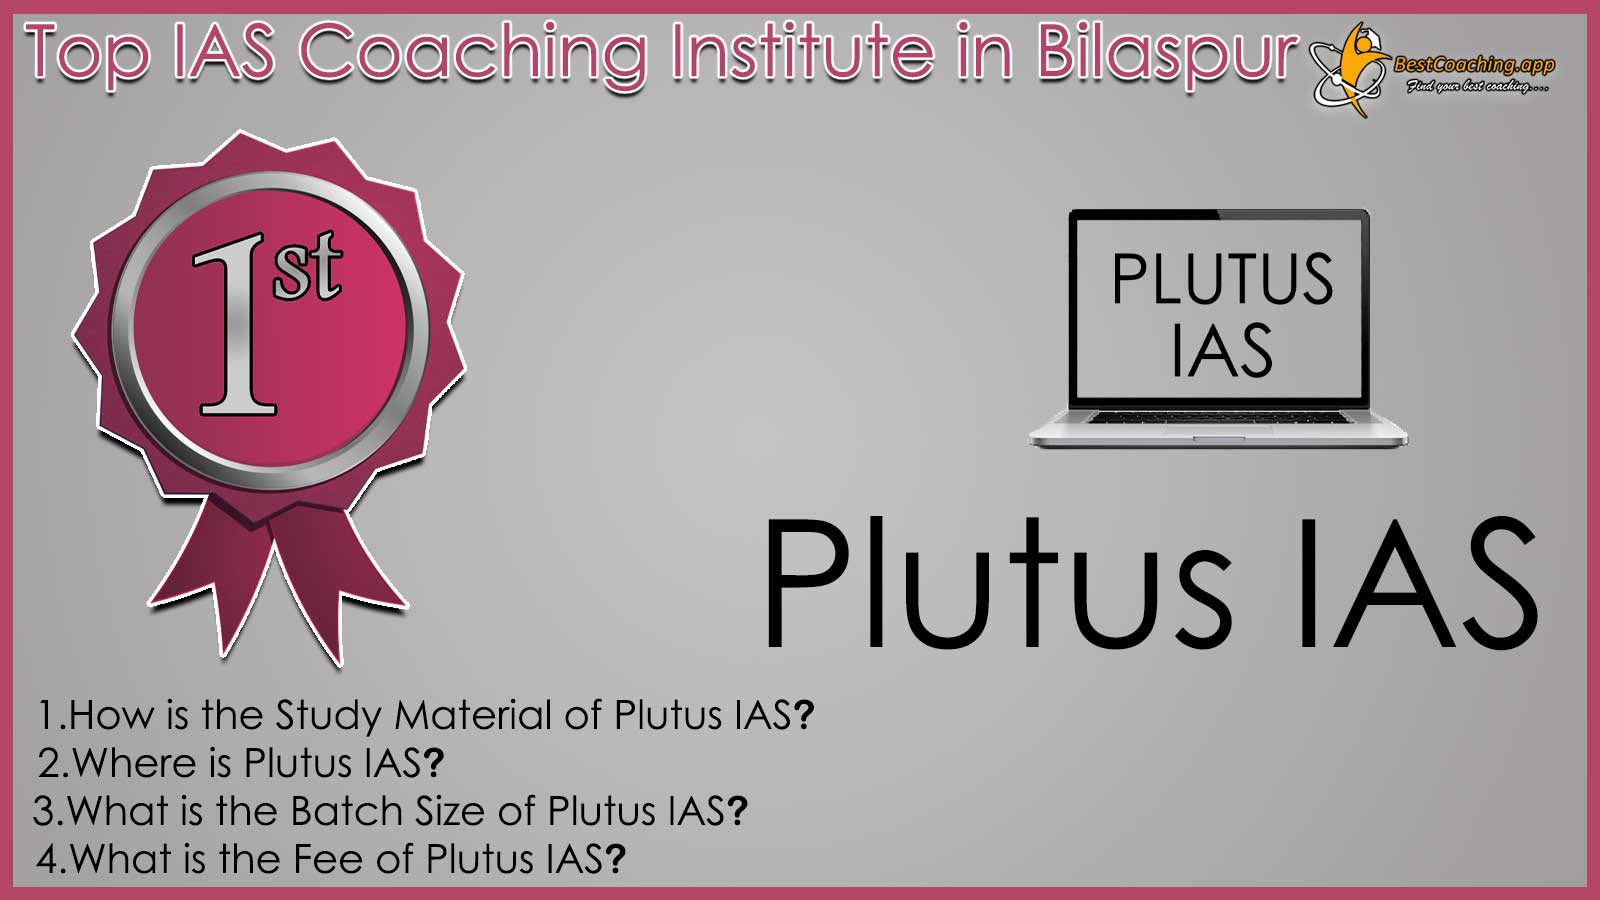 Best IAS Coaching in Bilaspur